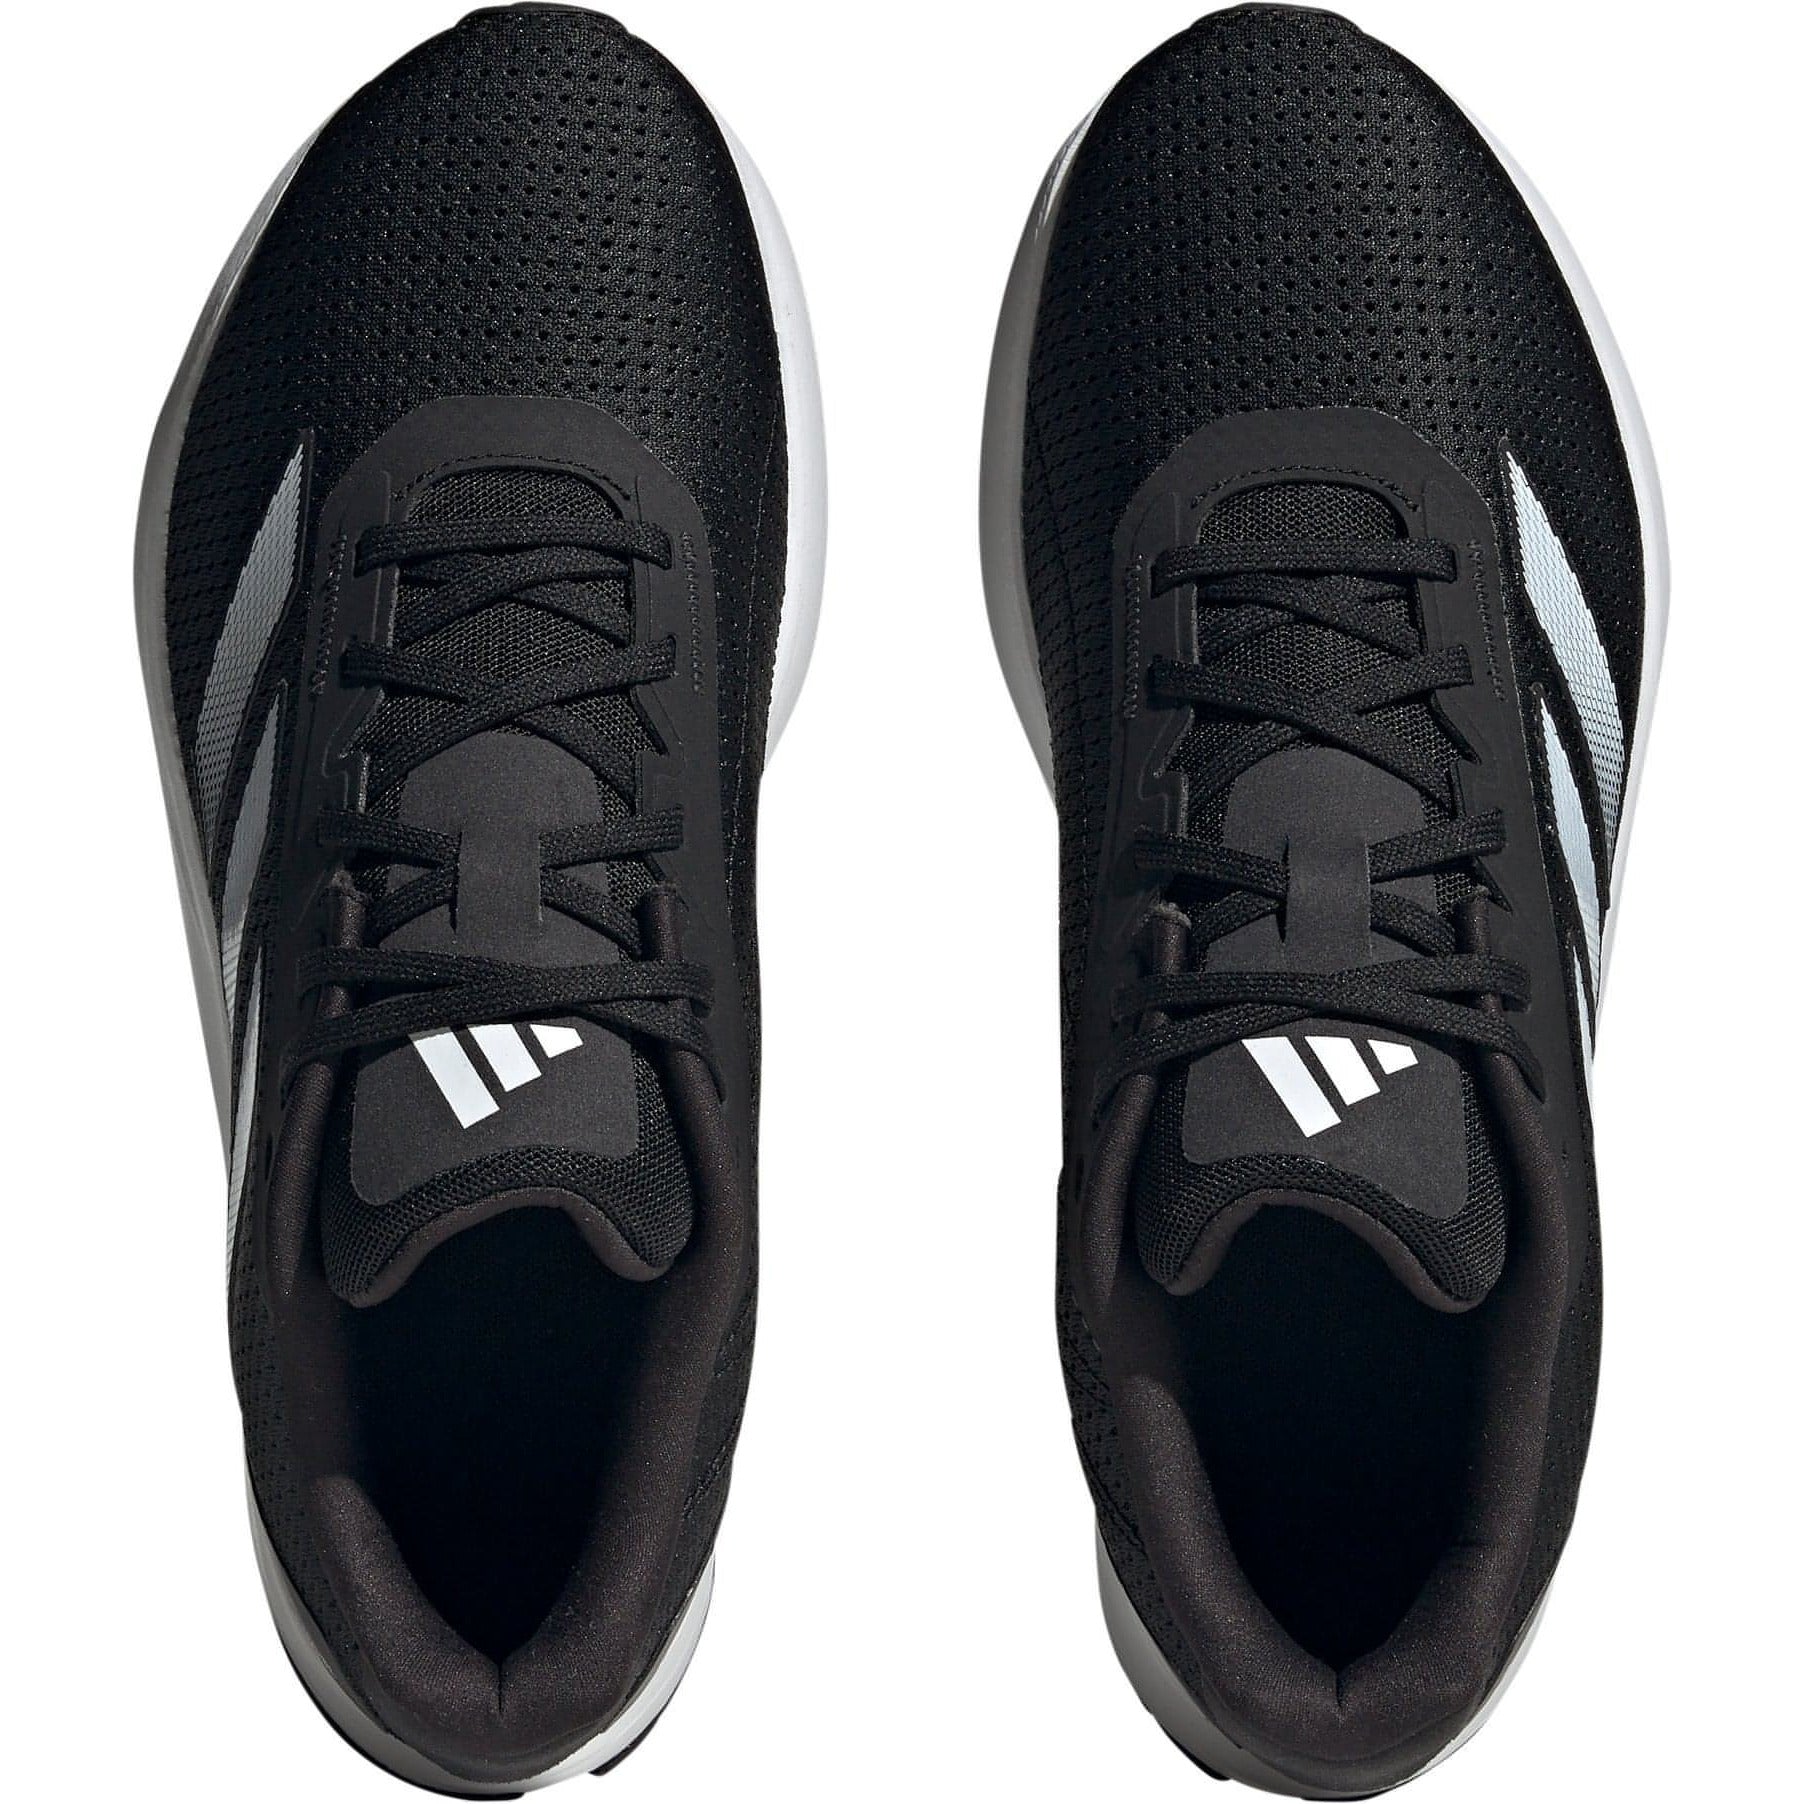 Adidas Duramo Sl Shoes Id9849 Top